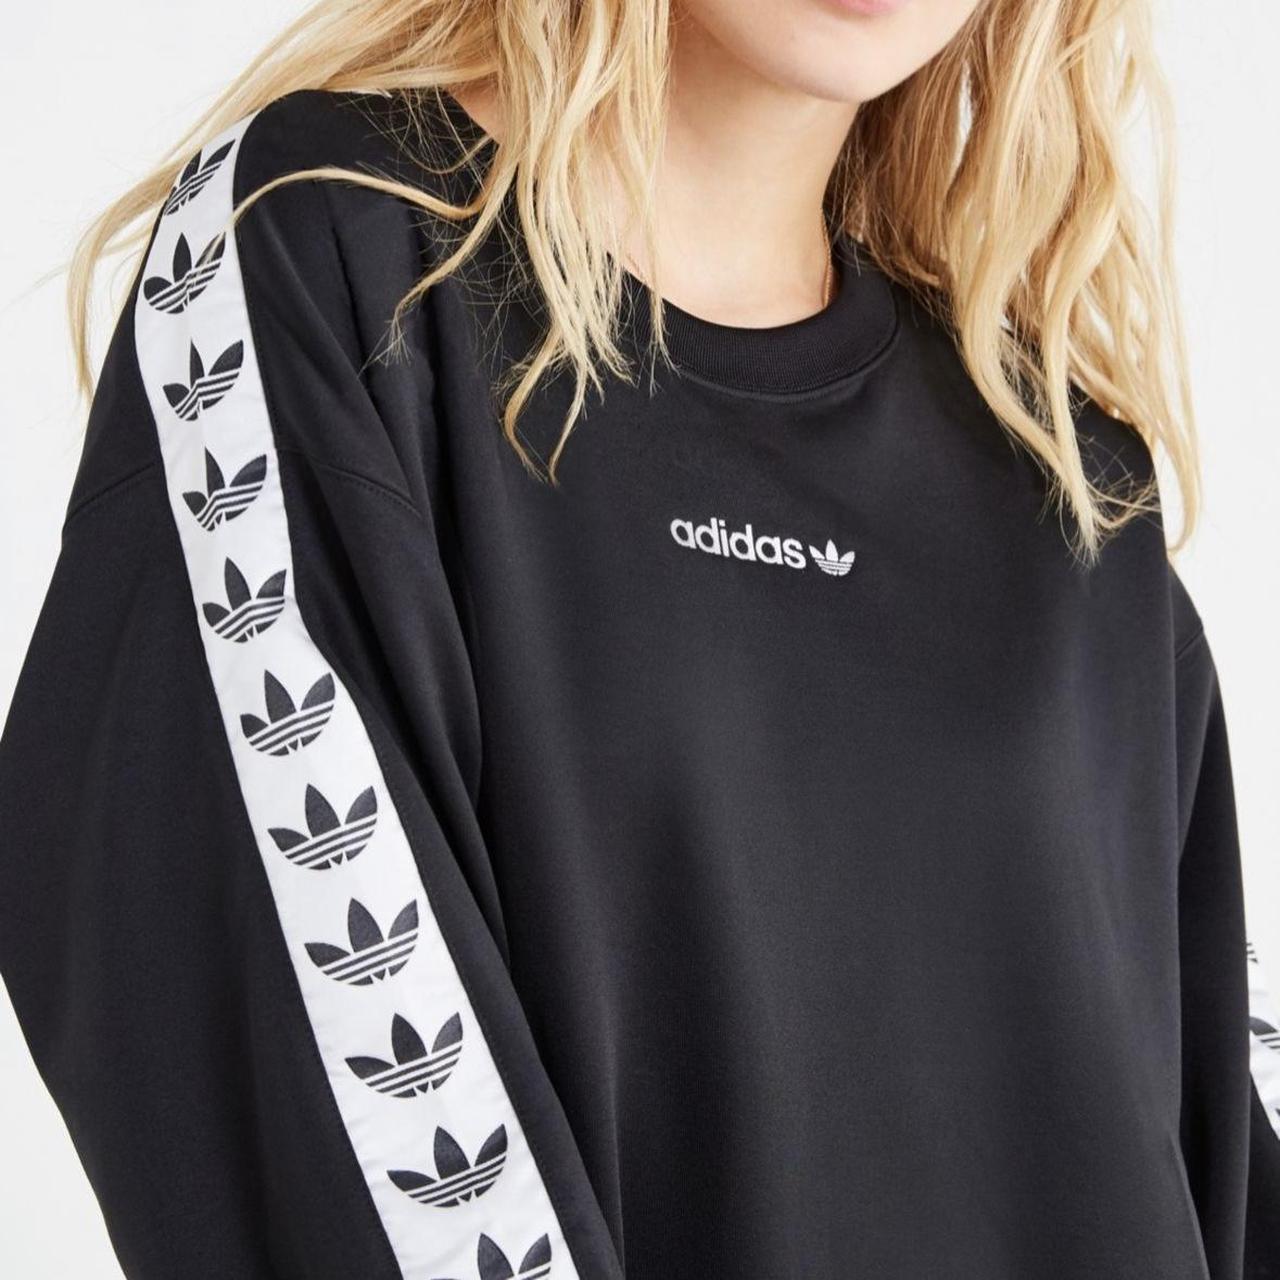 Adidas Originals Taped Crewneck Depop - Sweatshirt Size